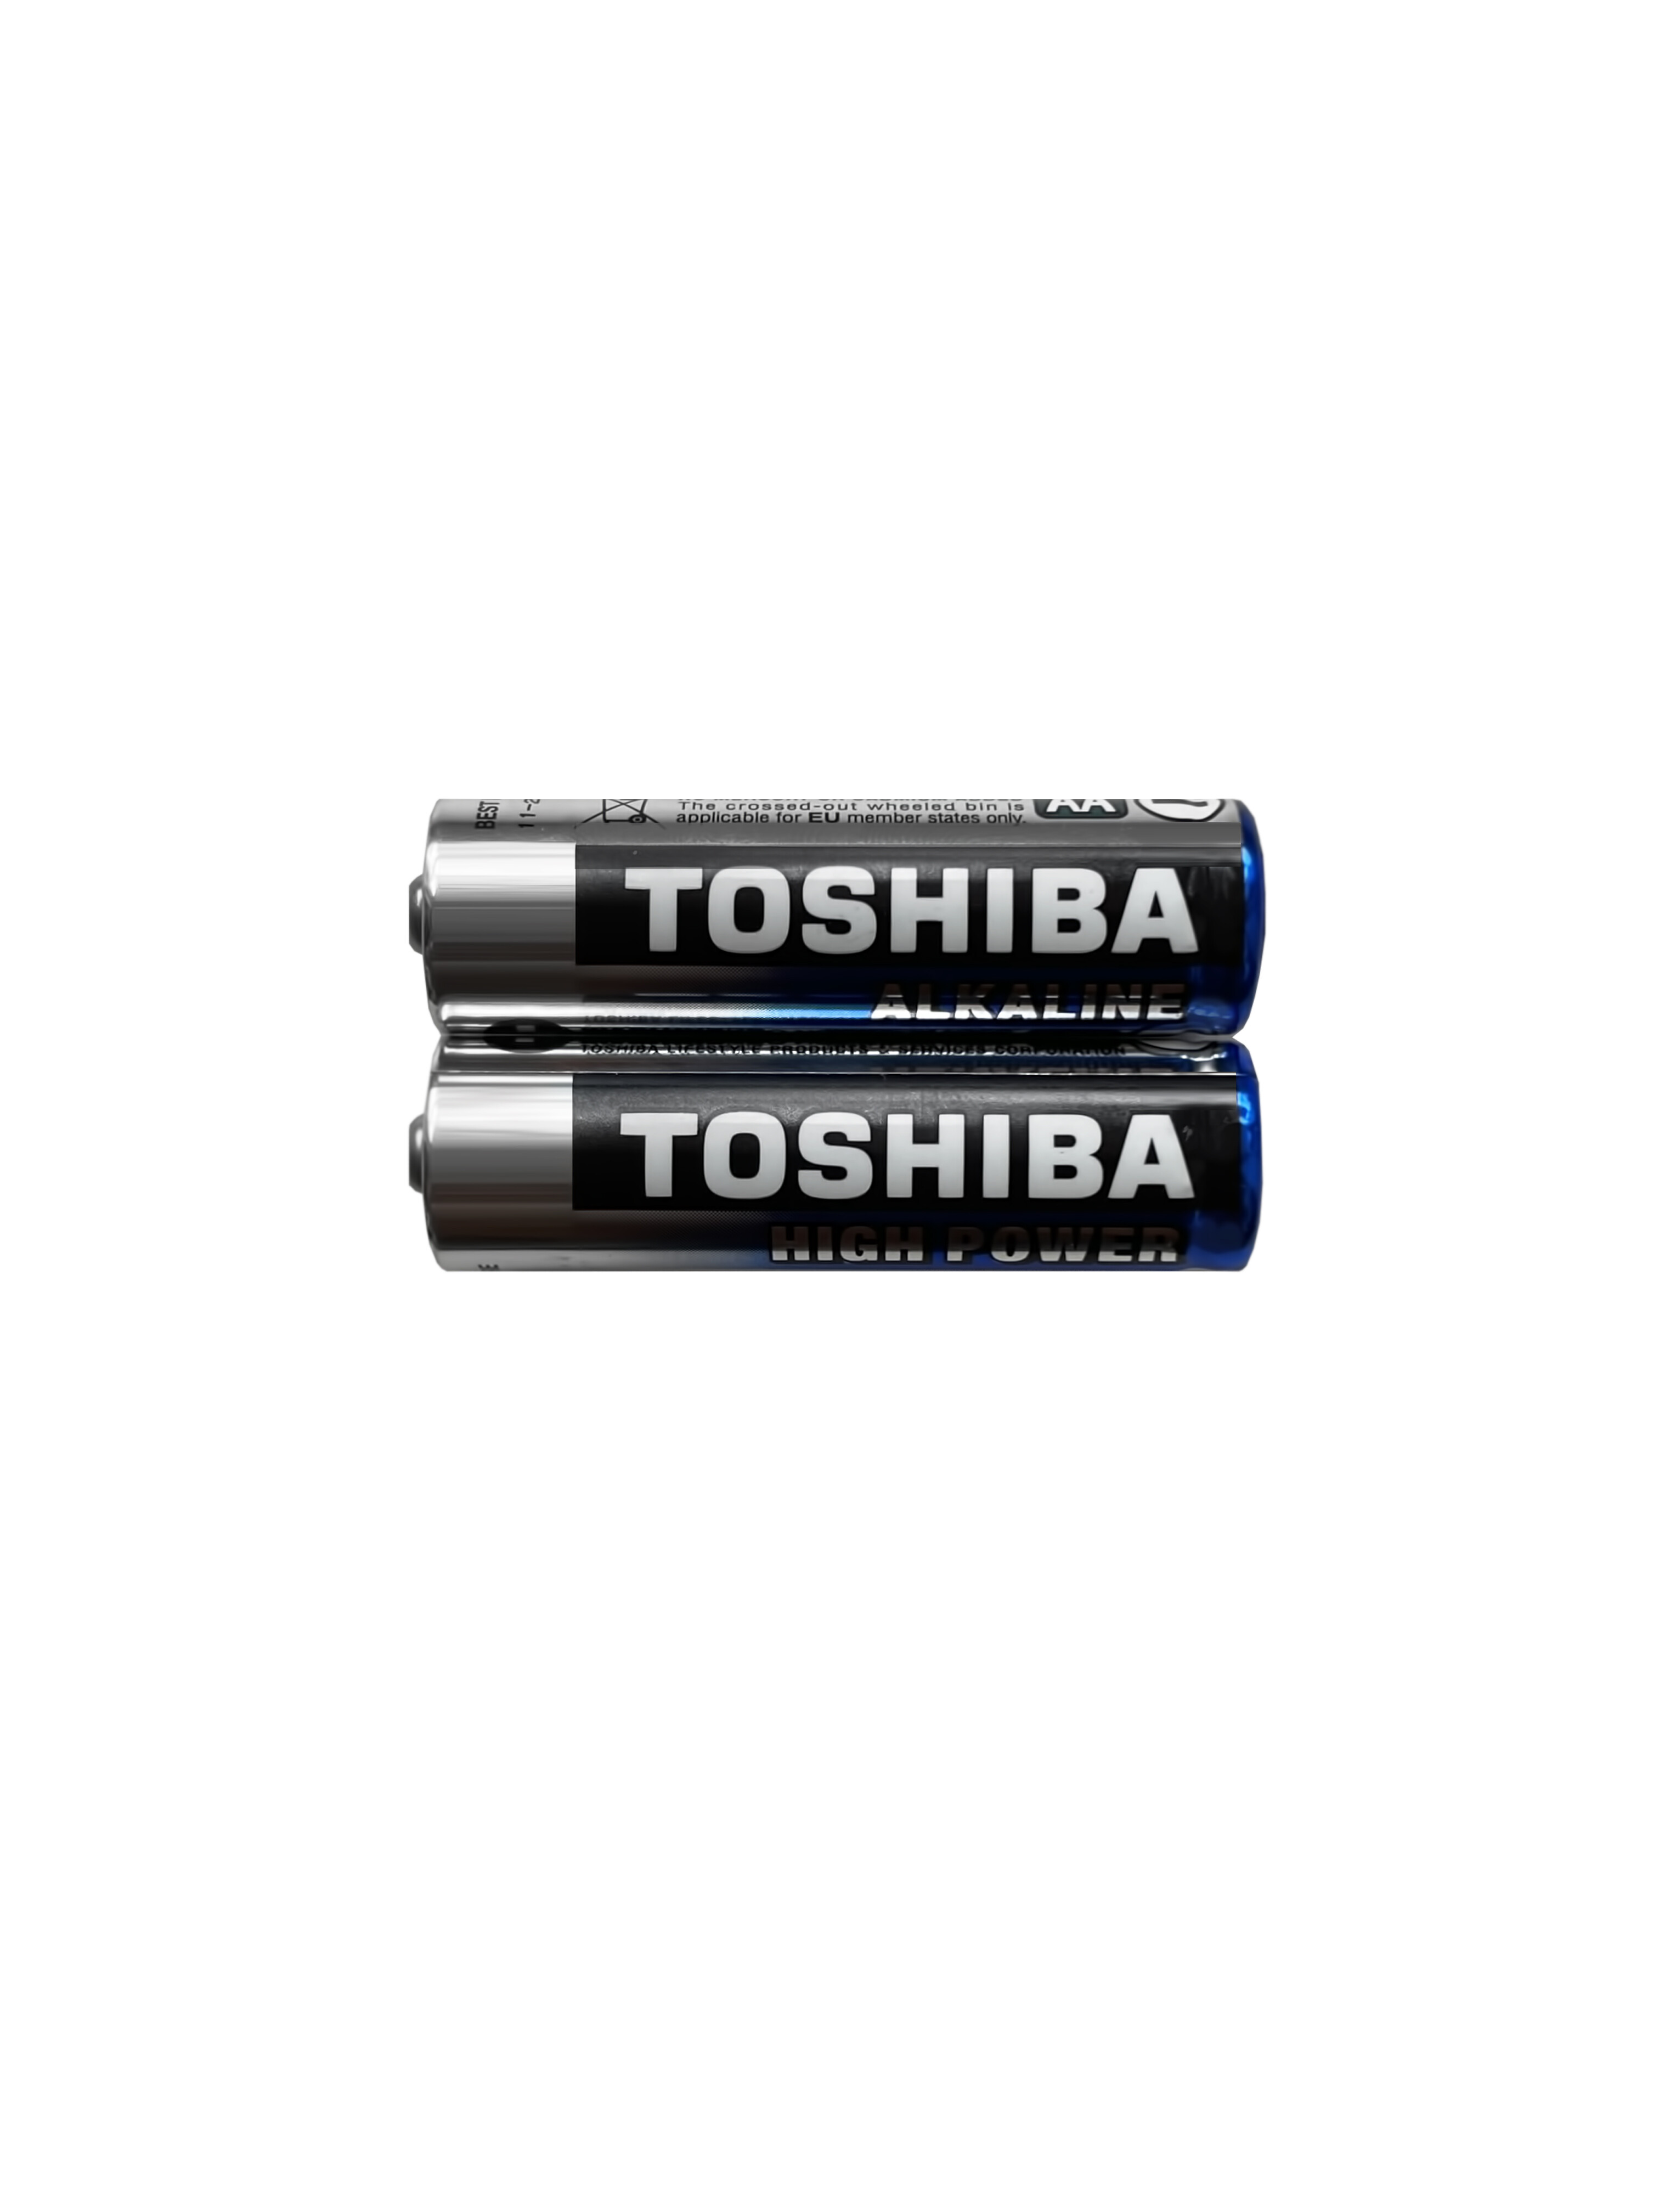 Батарейки Toshiba LR6 щелочные (alkaline) ПАЛЬЧИК High Power (2шт) AA 1,5V батарейки toshiba lr6 щелочные alkaline пальчик high power 12шт aa 1 5v